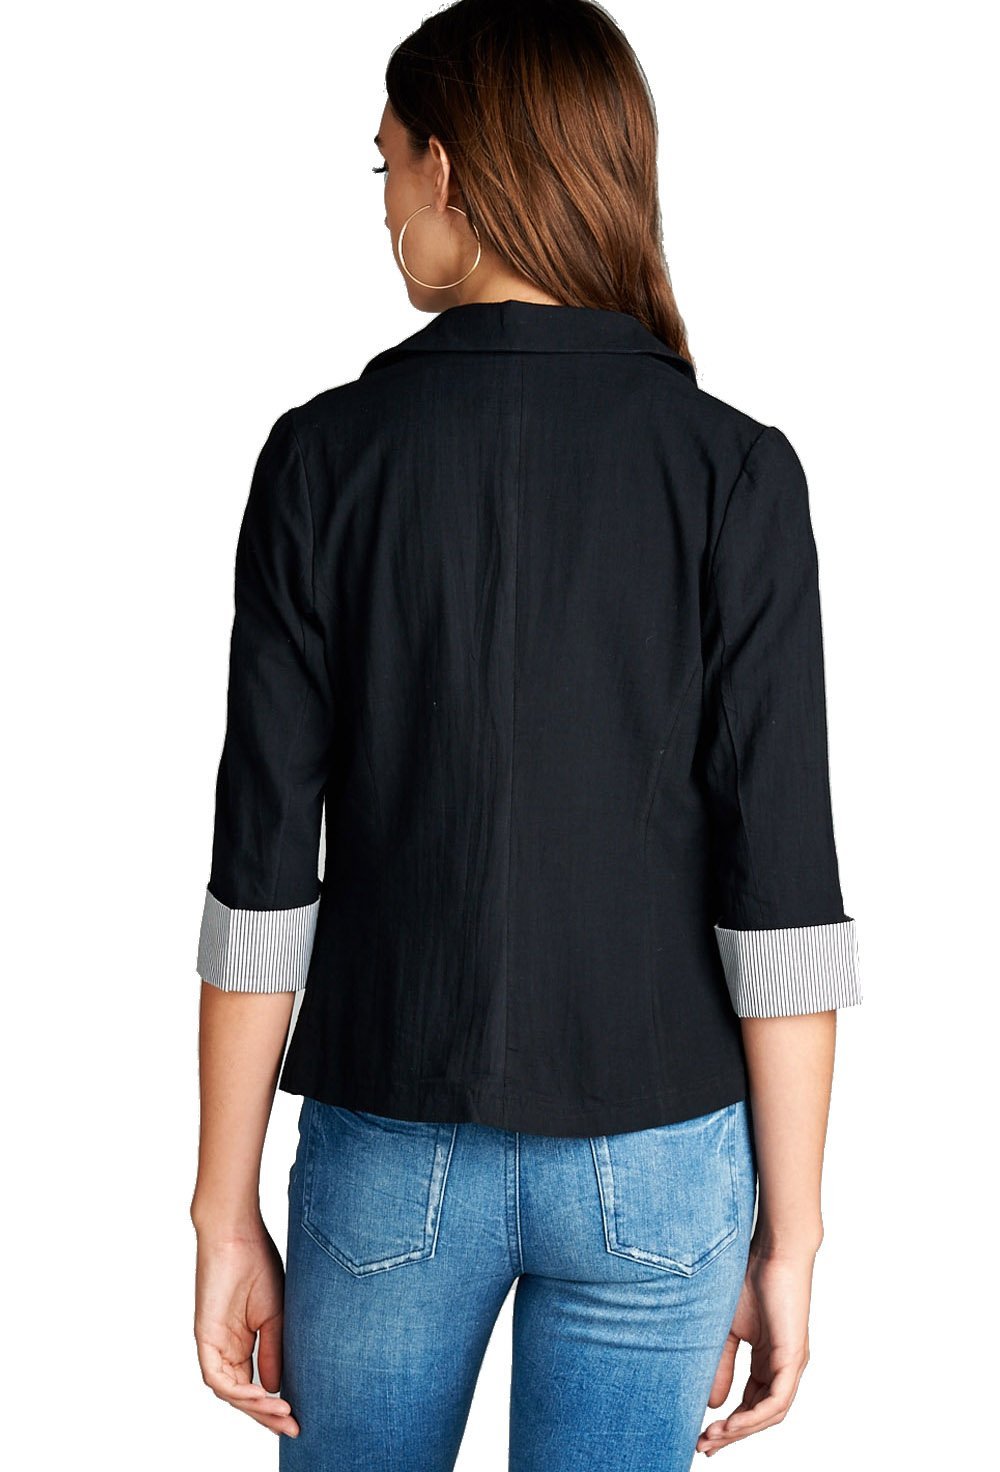 Khanomak Plain Cotton 3/4 Sleeve One Button Striped Cuffed Sleeves Blazer Jacket